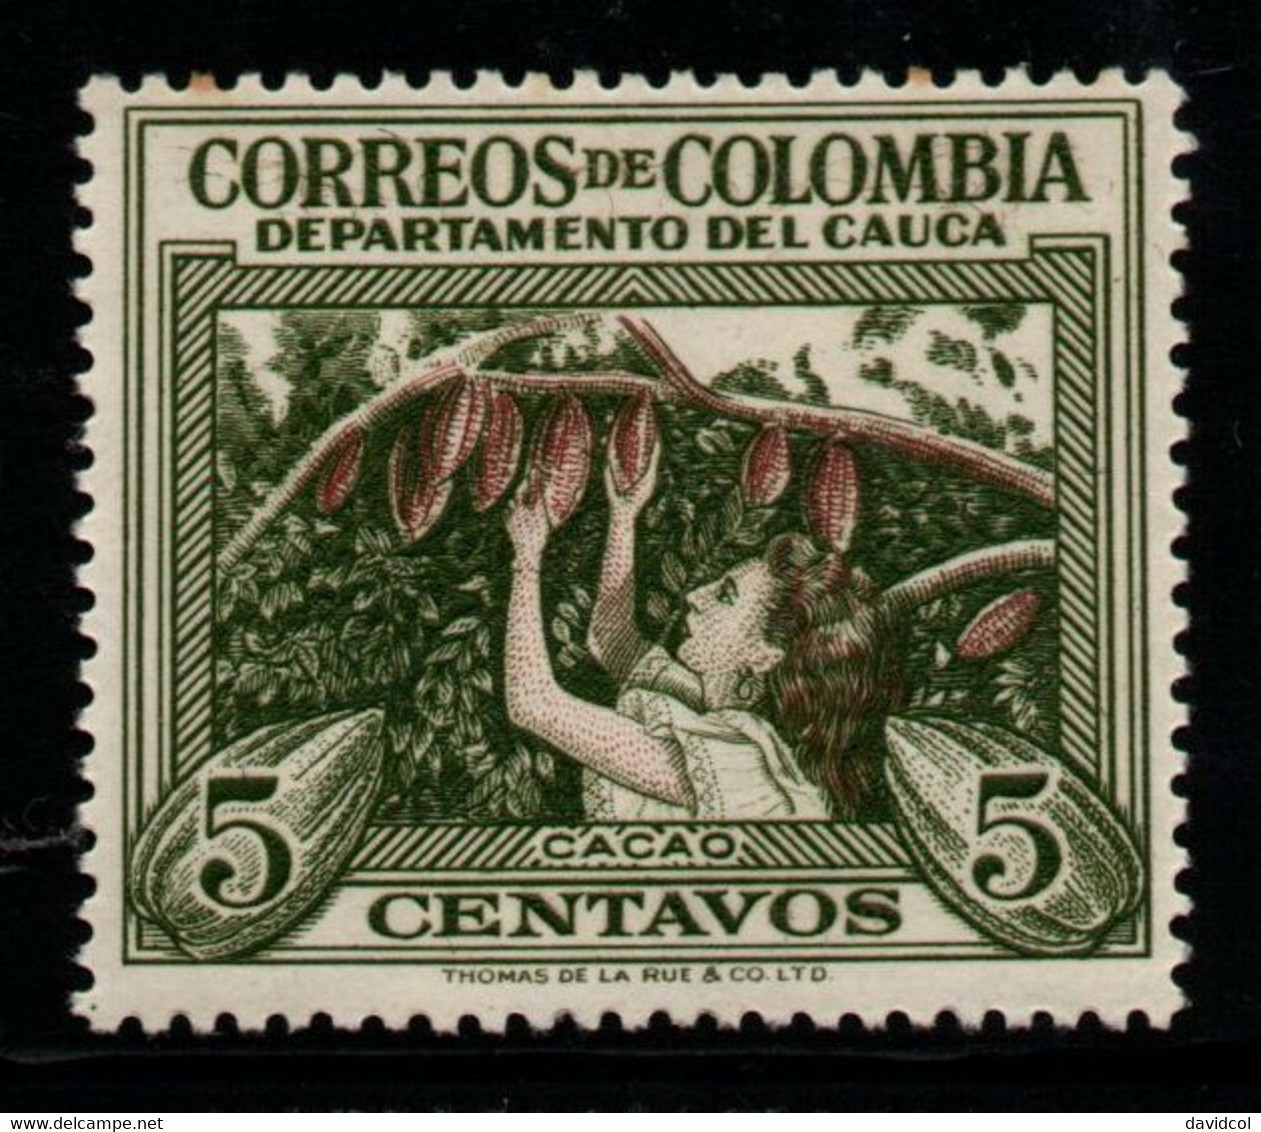 01J- KOLUMBIEN - 1956 - MI#: 773 - MNH - CAUCA / COCOA CROPS - COLOMBIAN DEPARTMENTS - Colombia